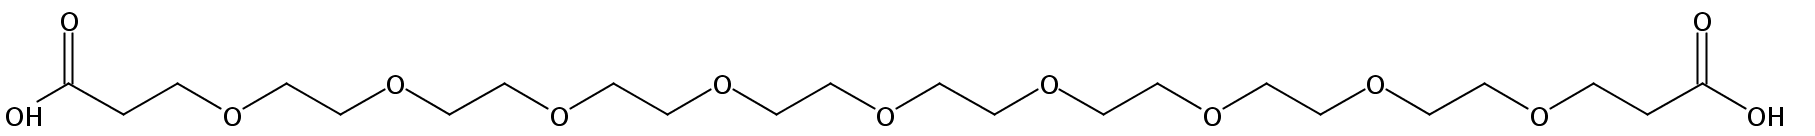 HOOC-PEG9-COOH;α,ω-dipropionic acid octaethylene glycol